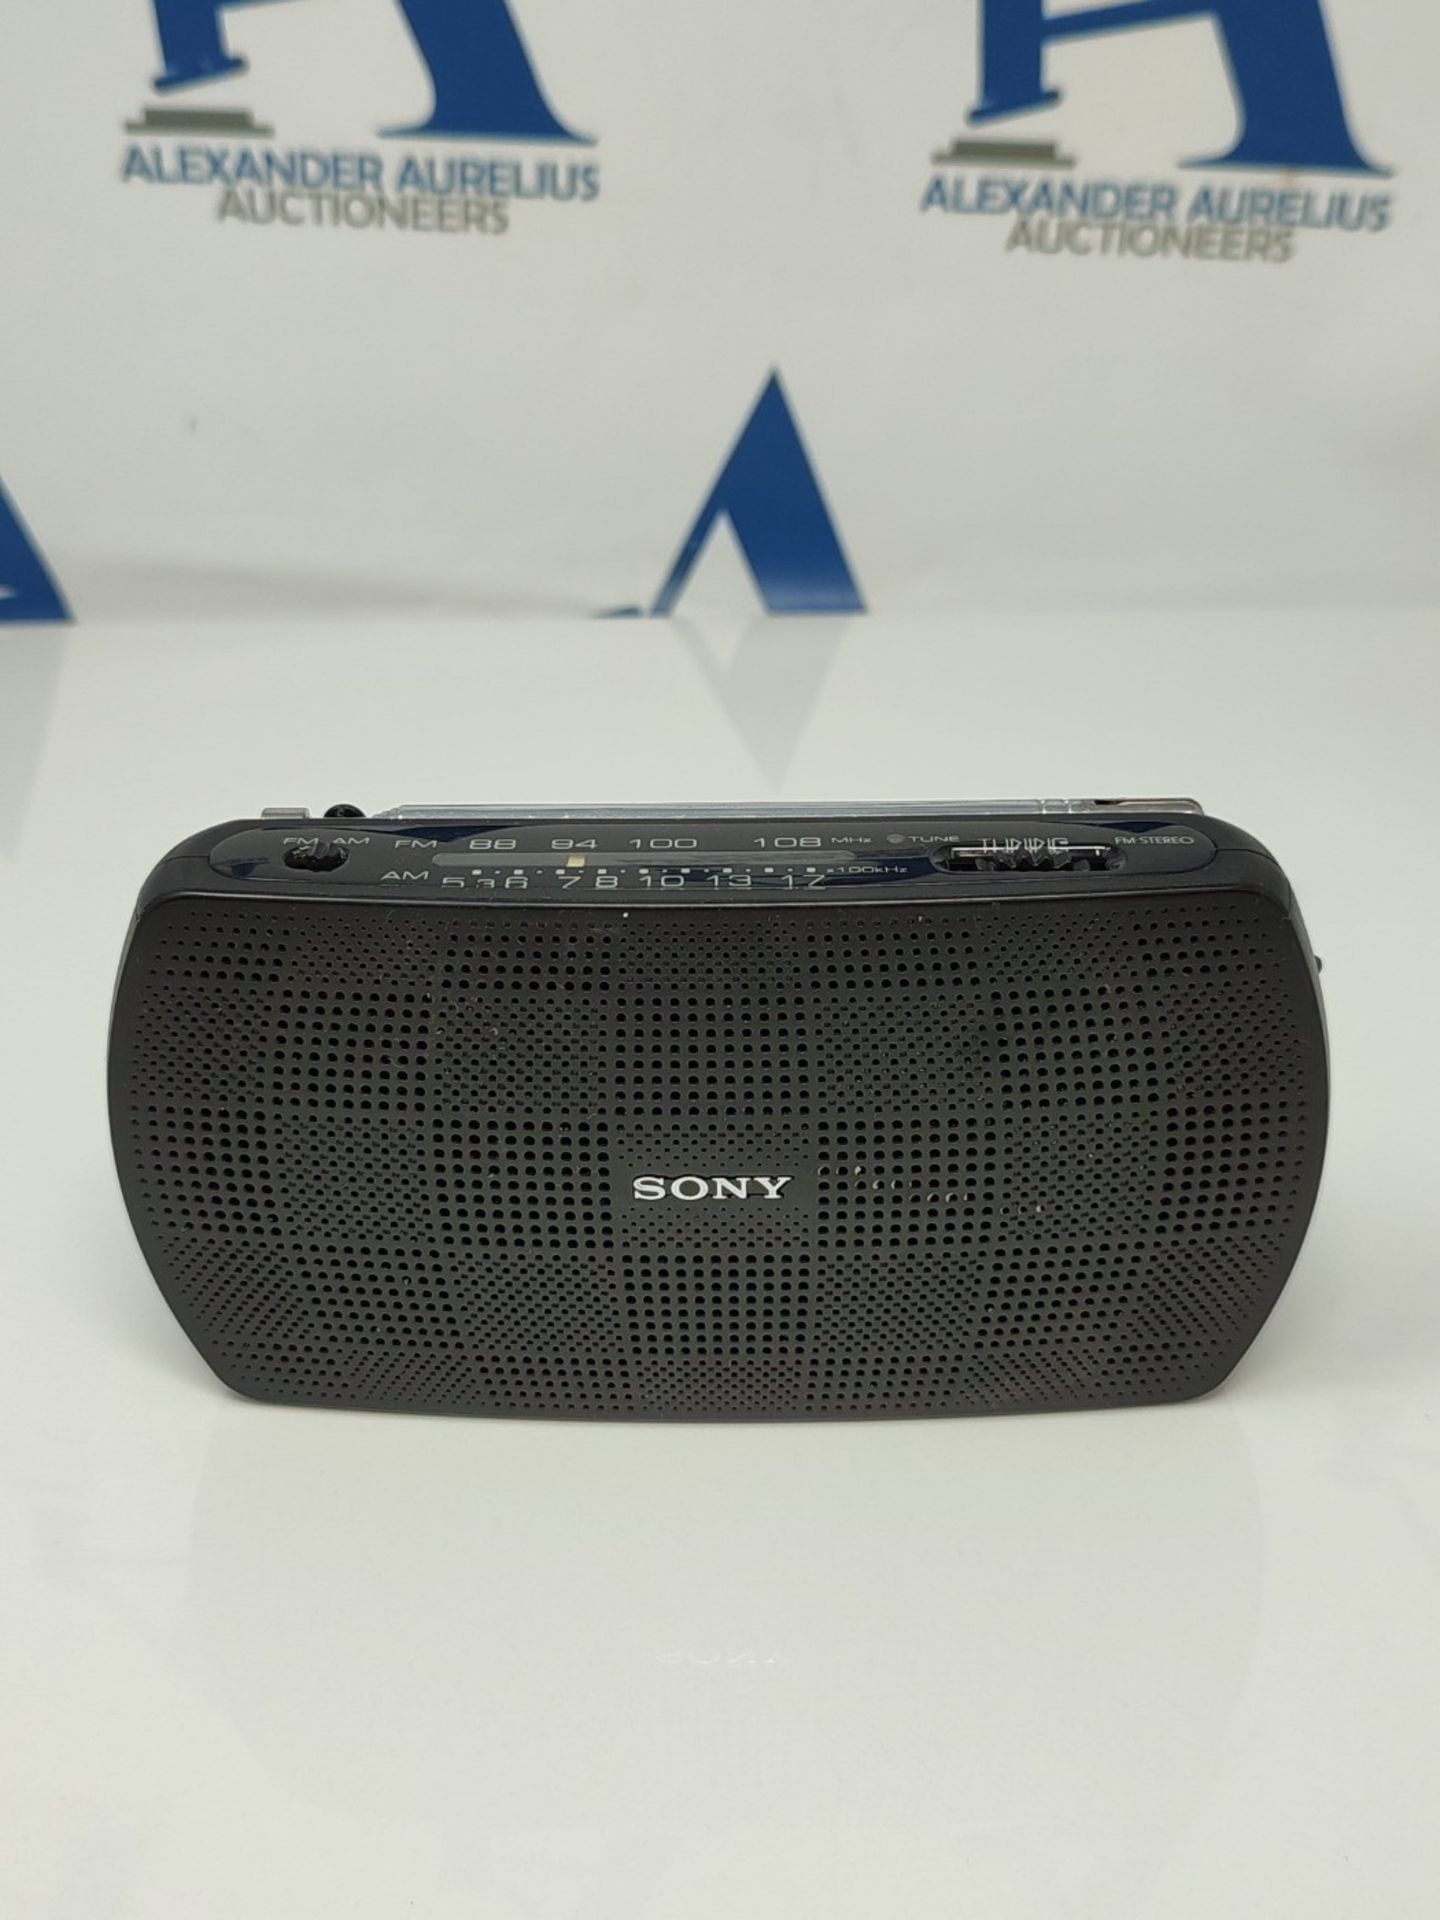 Sony SRF-18 AM/FM Portable Radio - Black